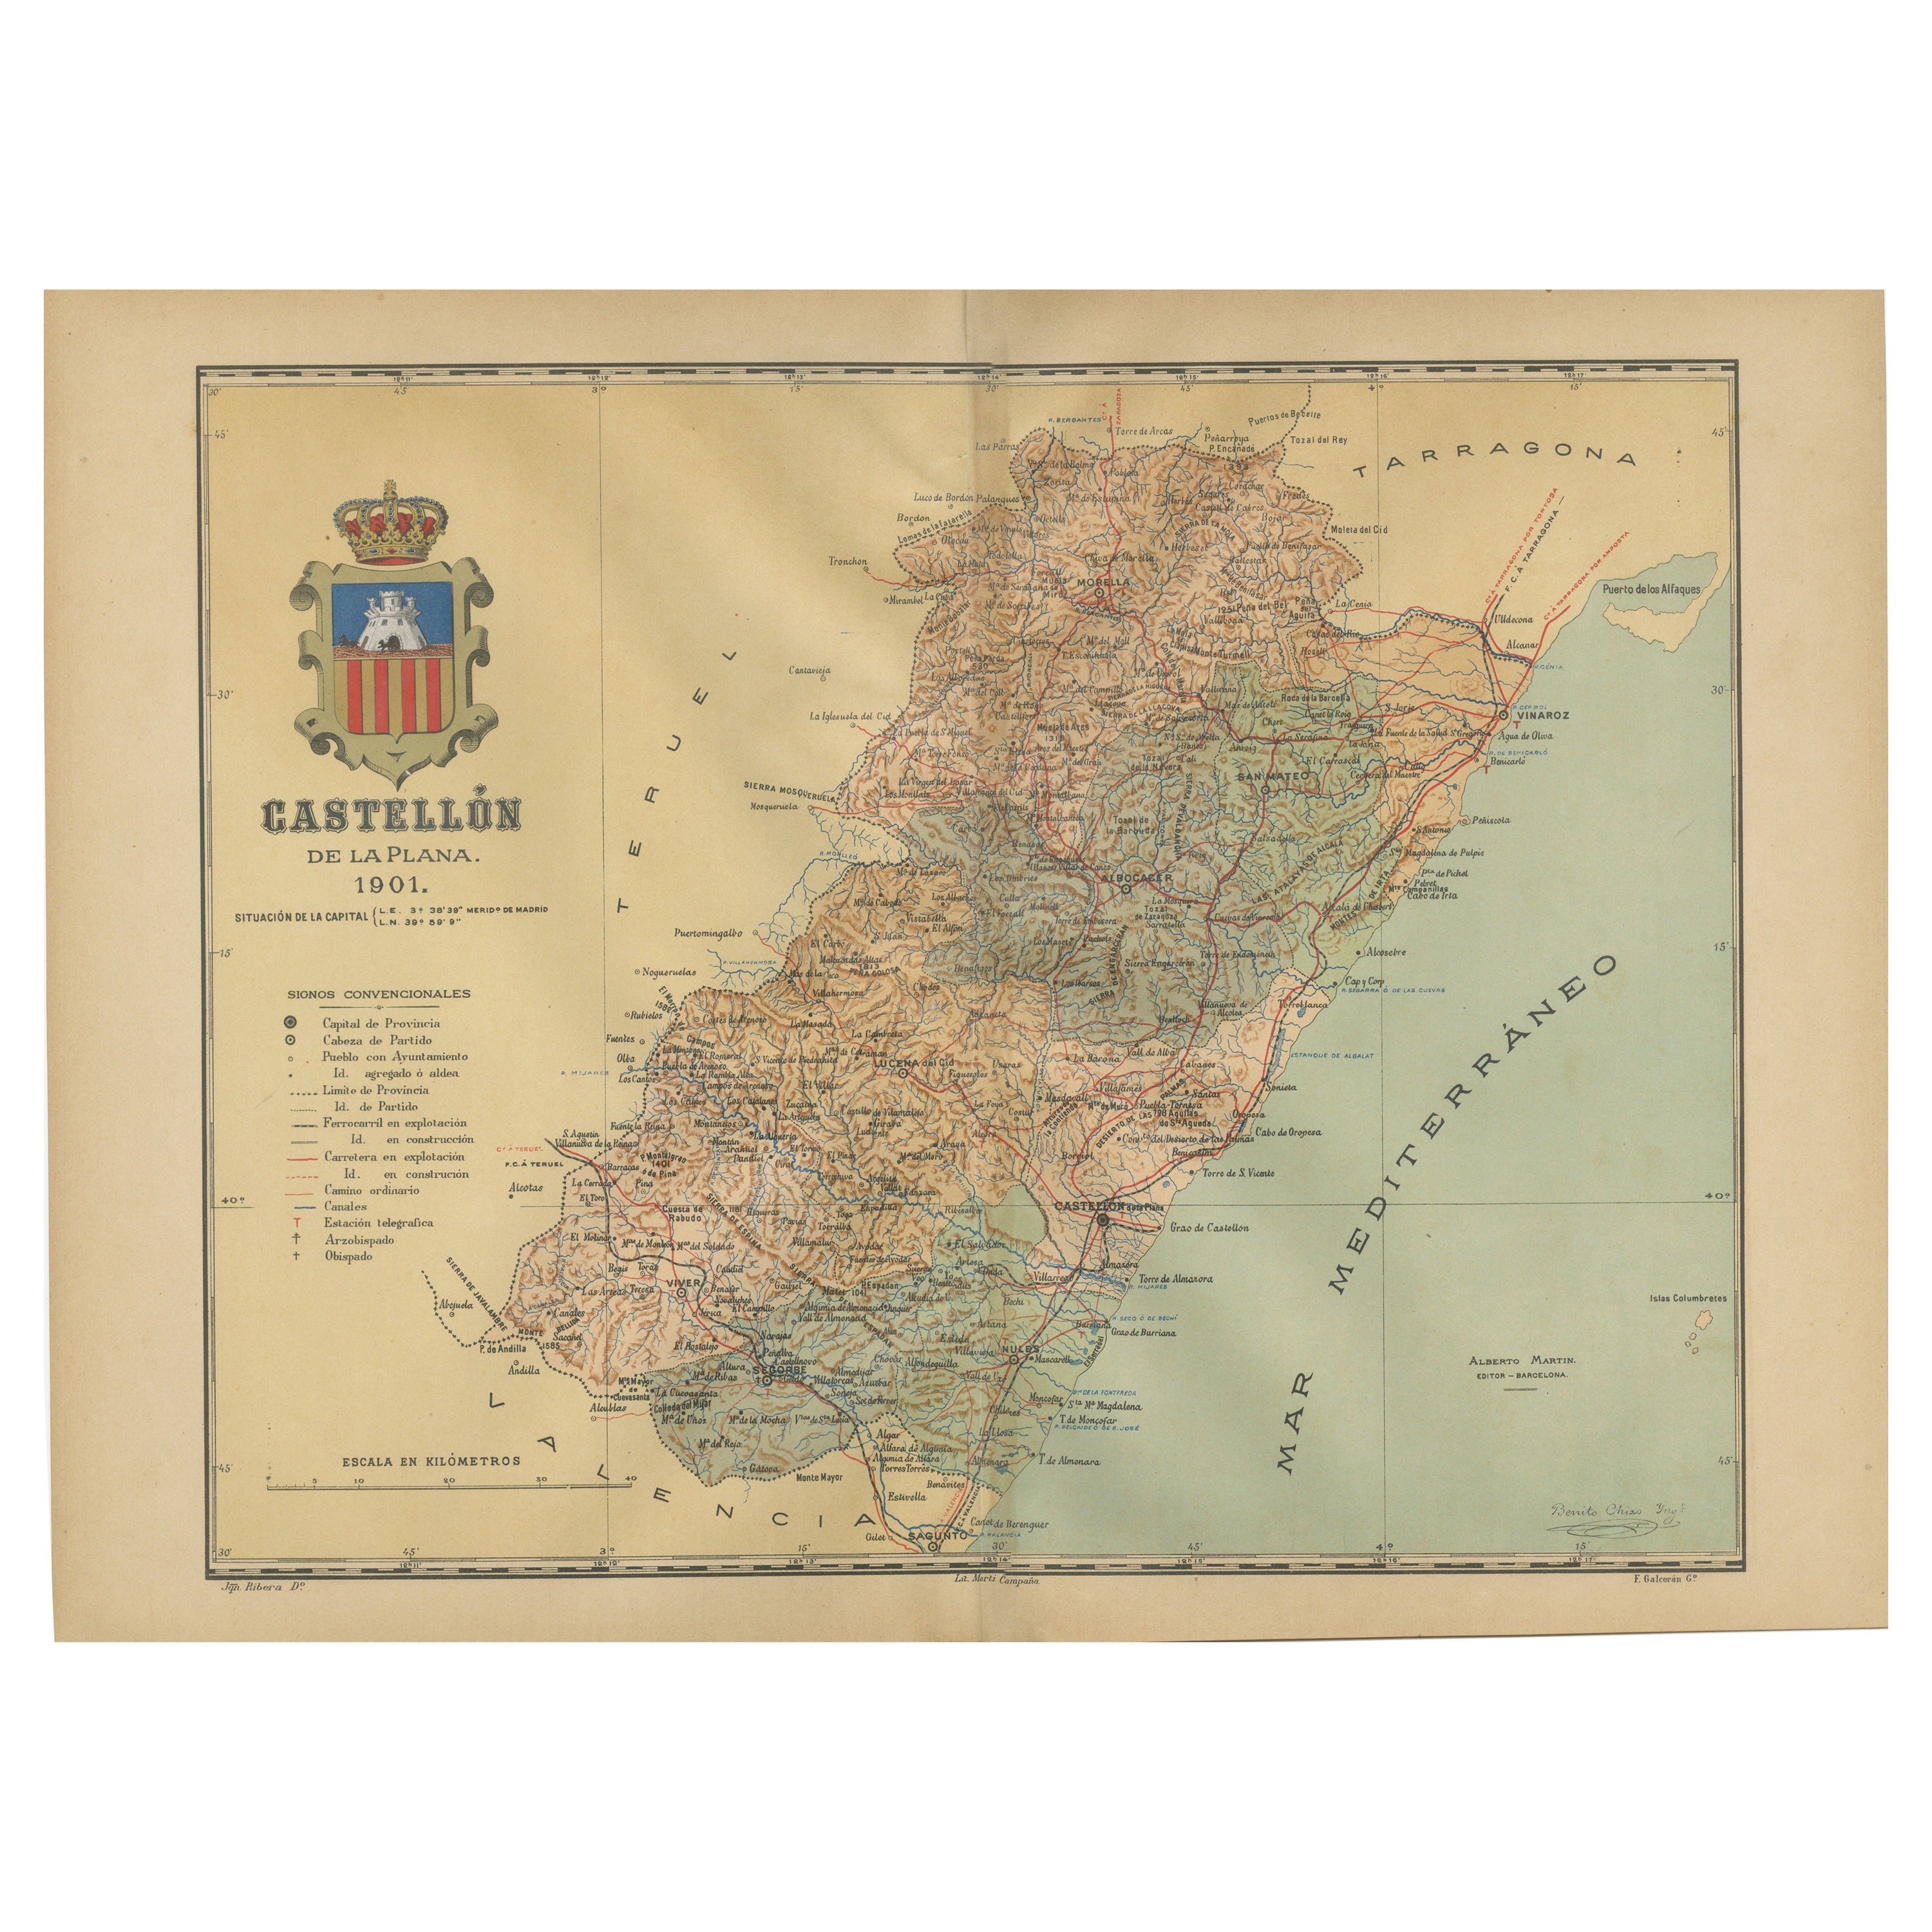 Castellón de la Plana 1901: A Cartographic Perspective of the Valencian Coast For Sale